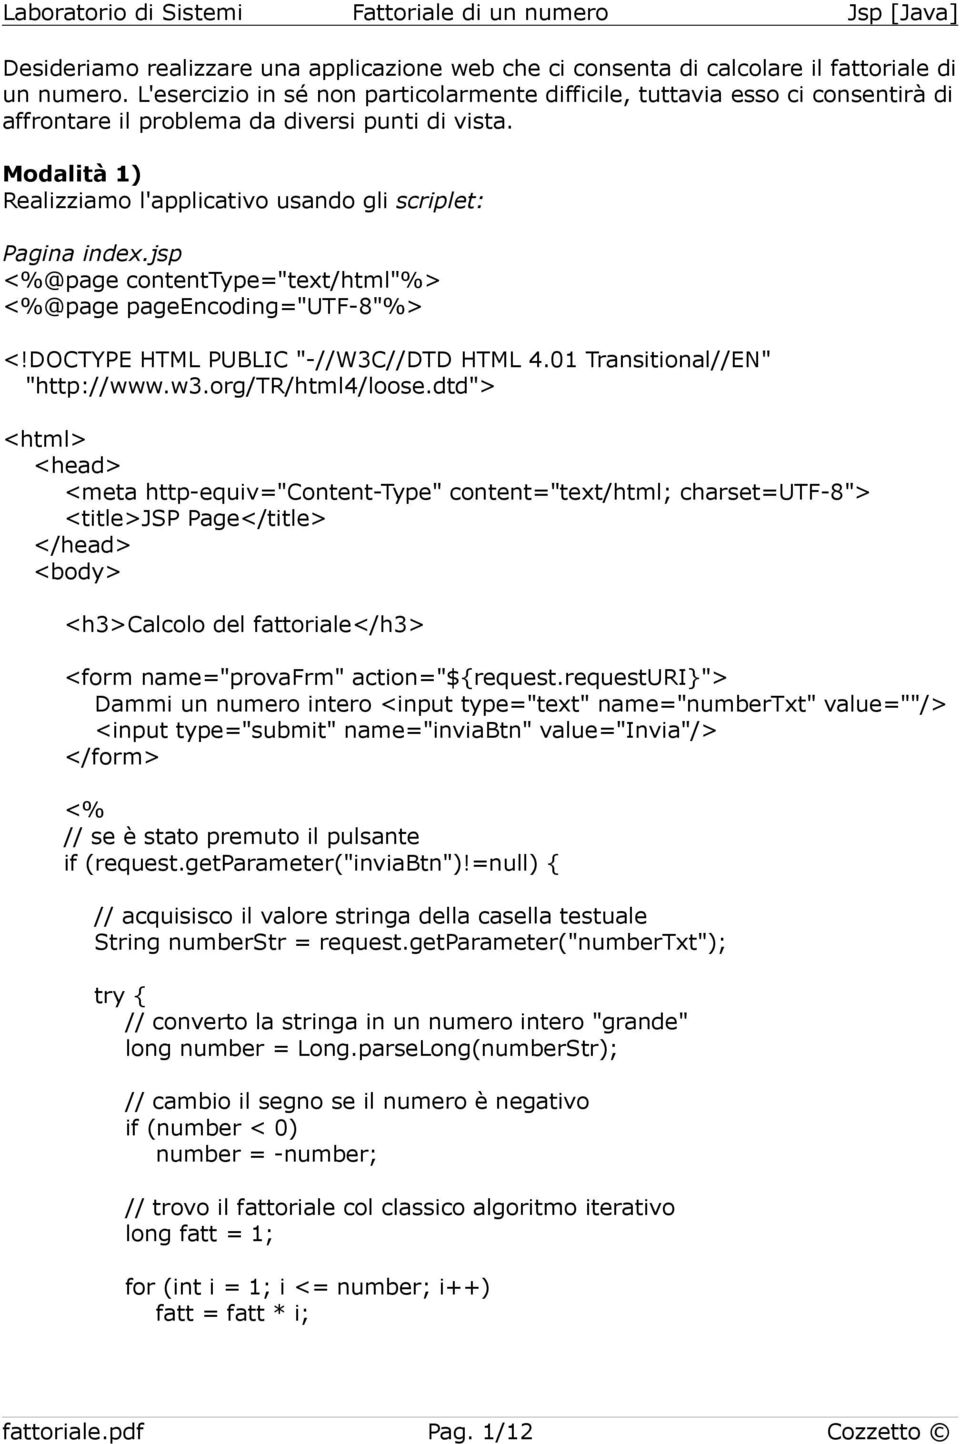 Modalità 1) Realizziamo l'applicativo usando gli scriplet: Pagina index.jsp <%@page contenttype="text/html"%> <%@page pageencoding="utf-8"%> <!DOCTYPE HTML PUBLIC "-//W3C//DTD HTML 4.